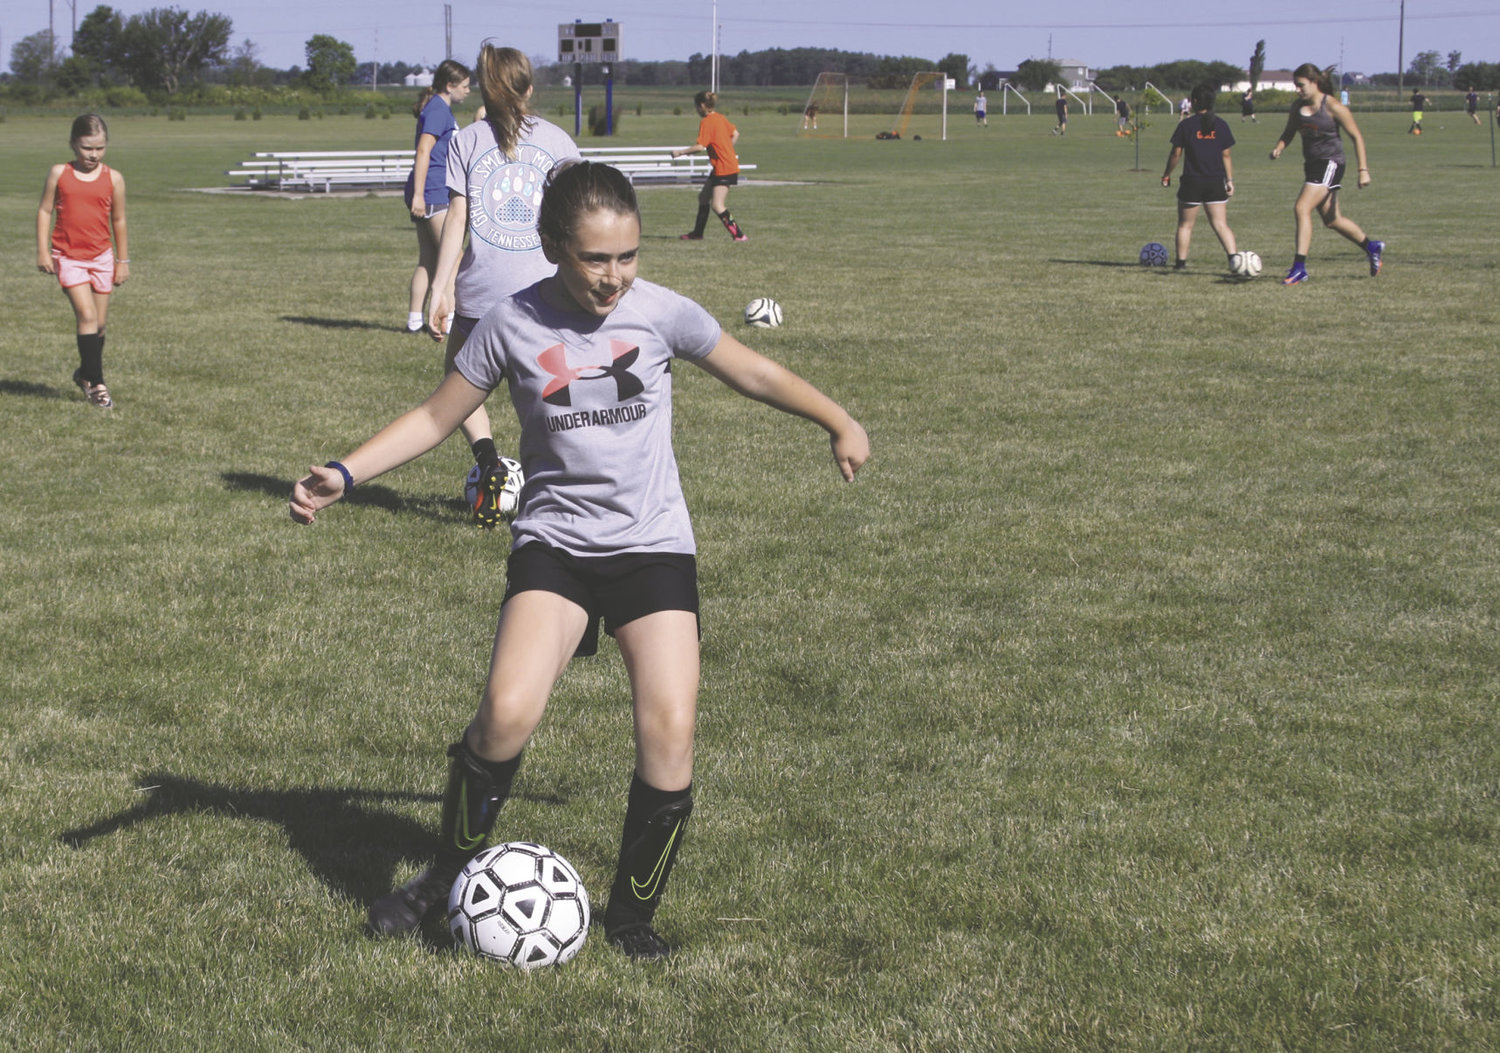 Bailey Nichols was having fun learning more soccer skills.